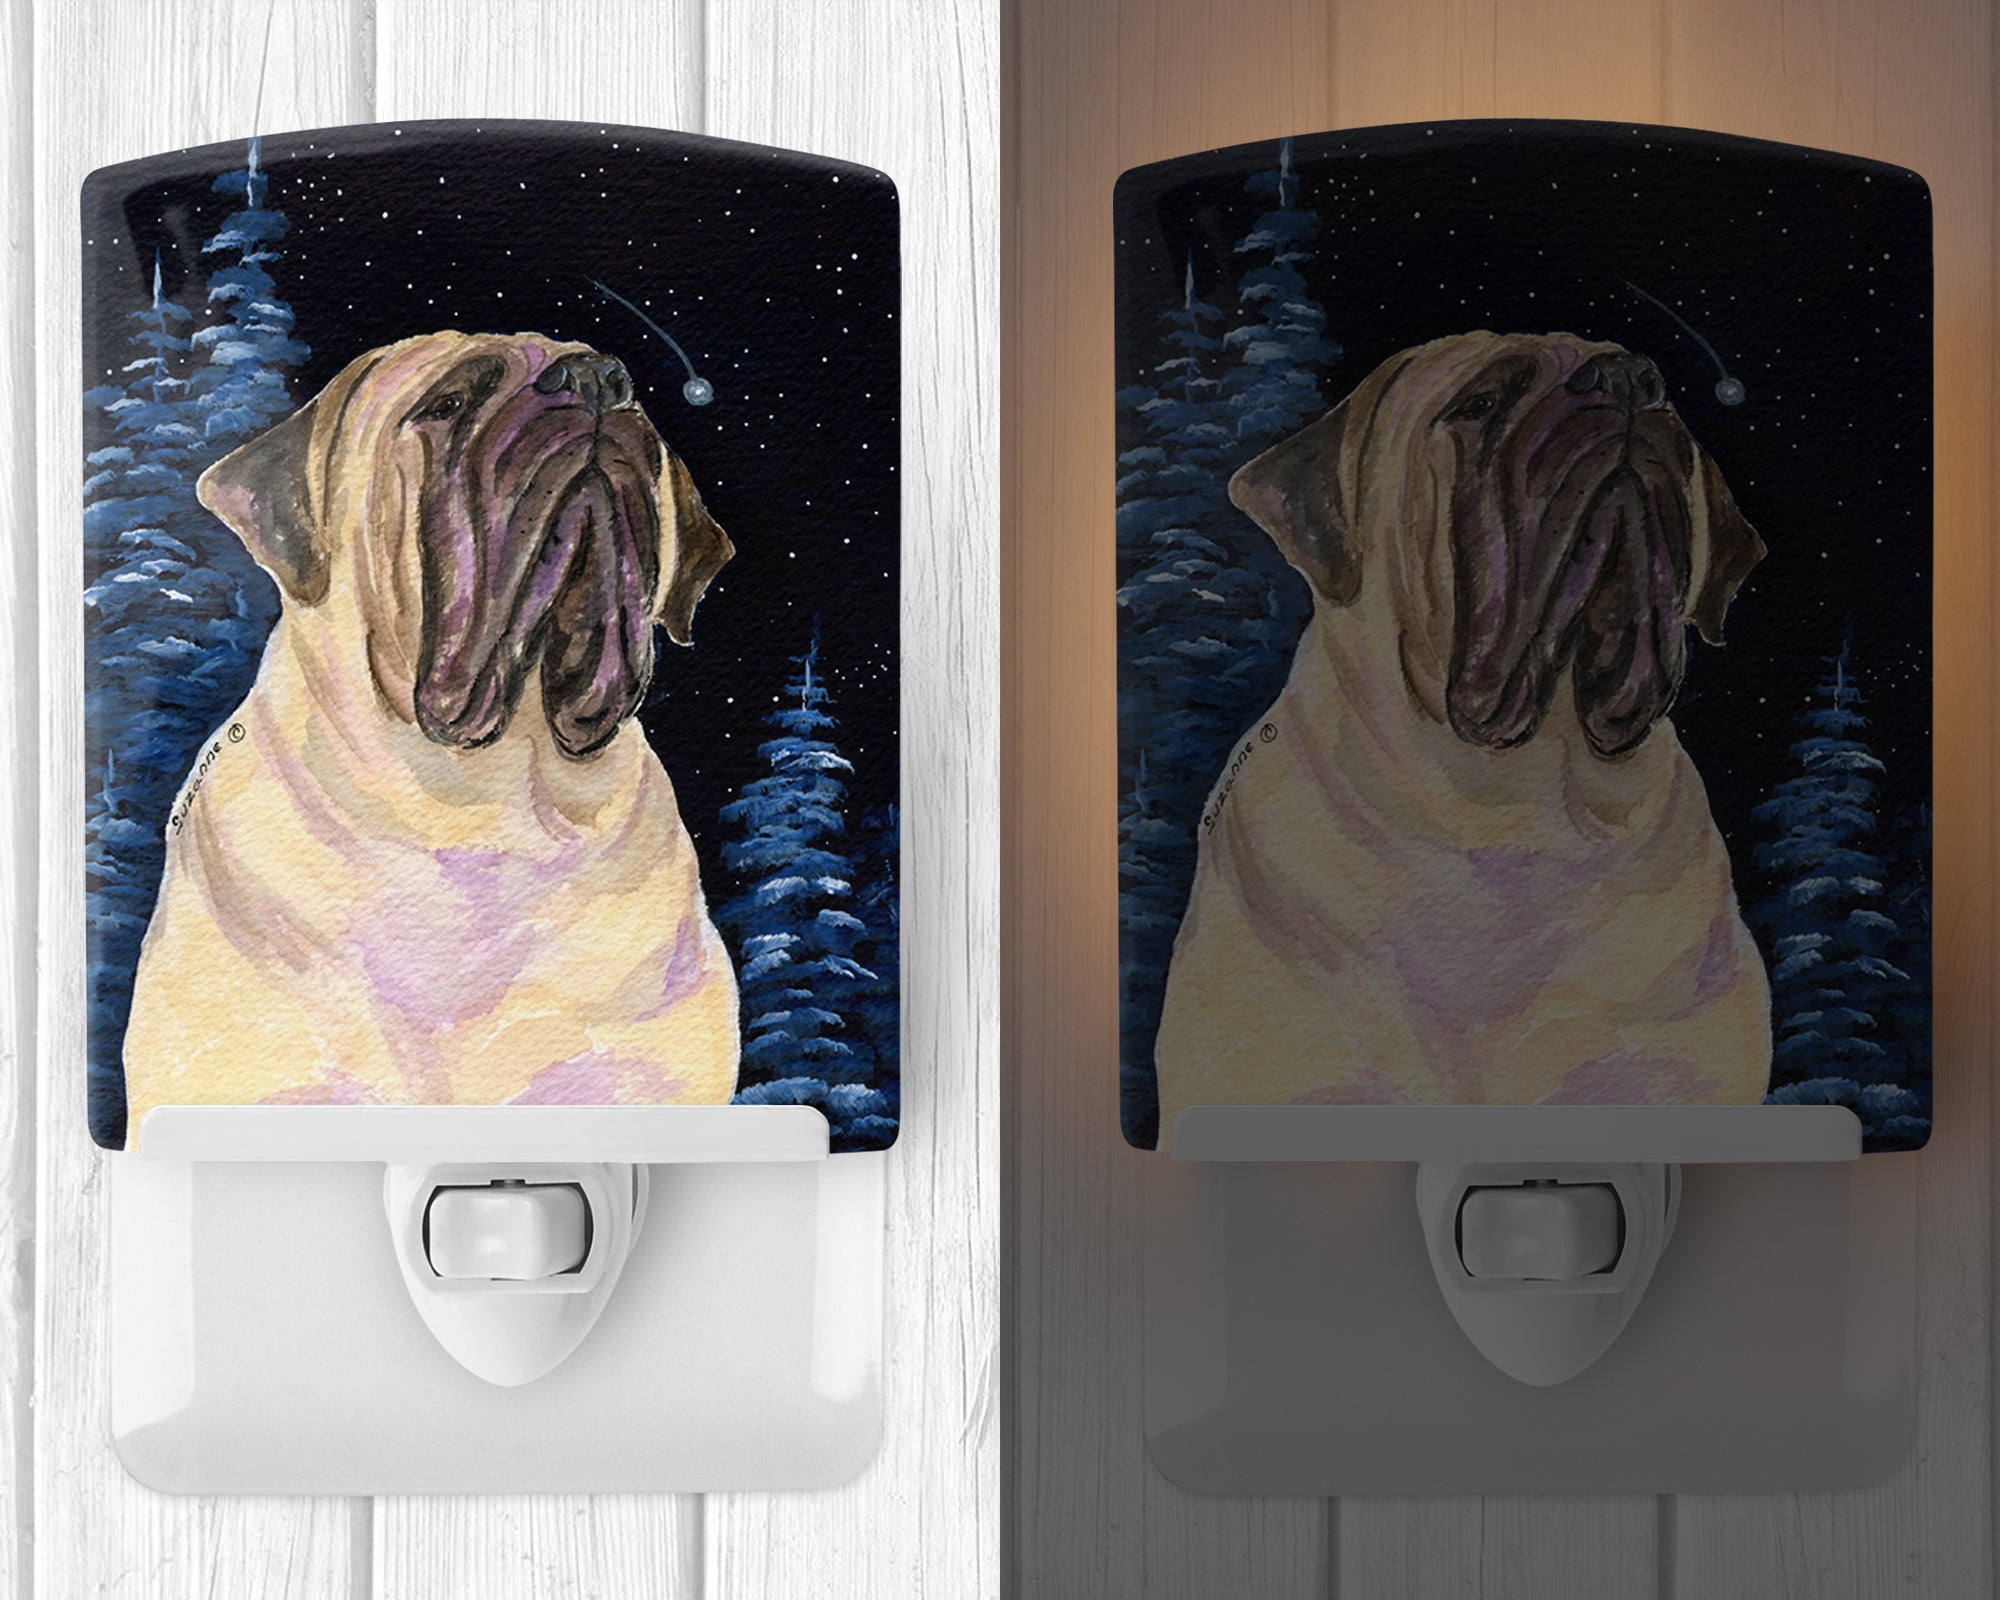 Starry Night Mastiff Ceramic Night Light SS8448CNL - the-store.com